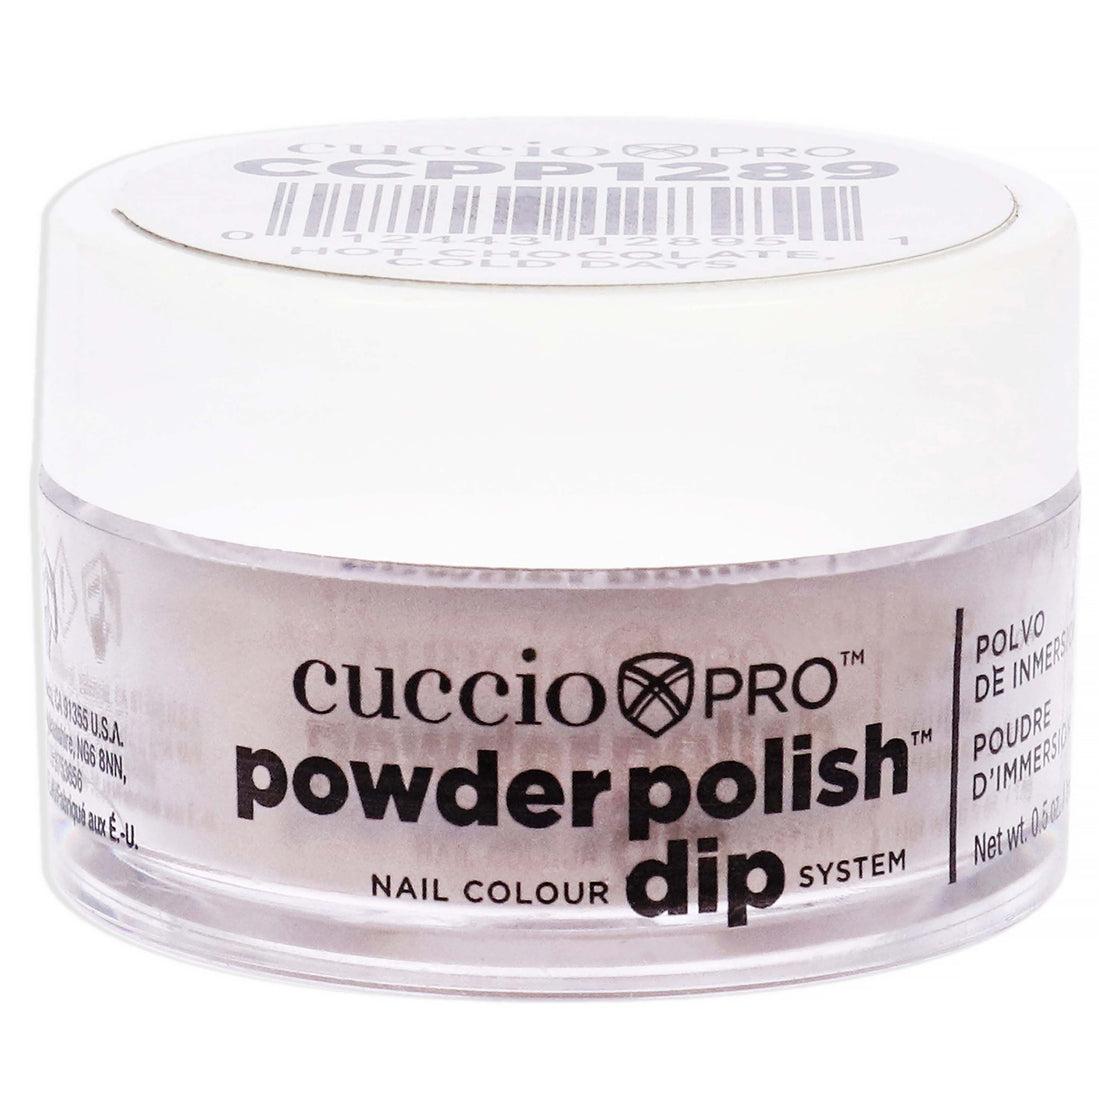 Pro Powder Polish Nail Colour Dip System - Hot Chocolate-Cold Days by Cuccio Colour for Women - 0.5 oz Nail Powder